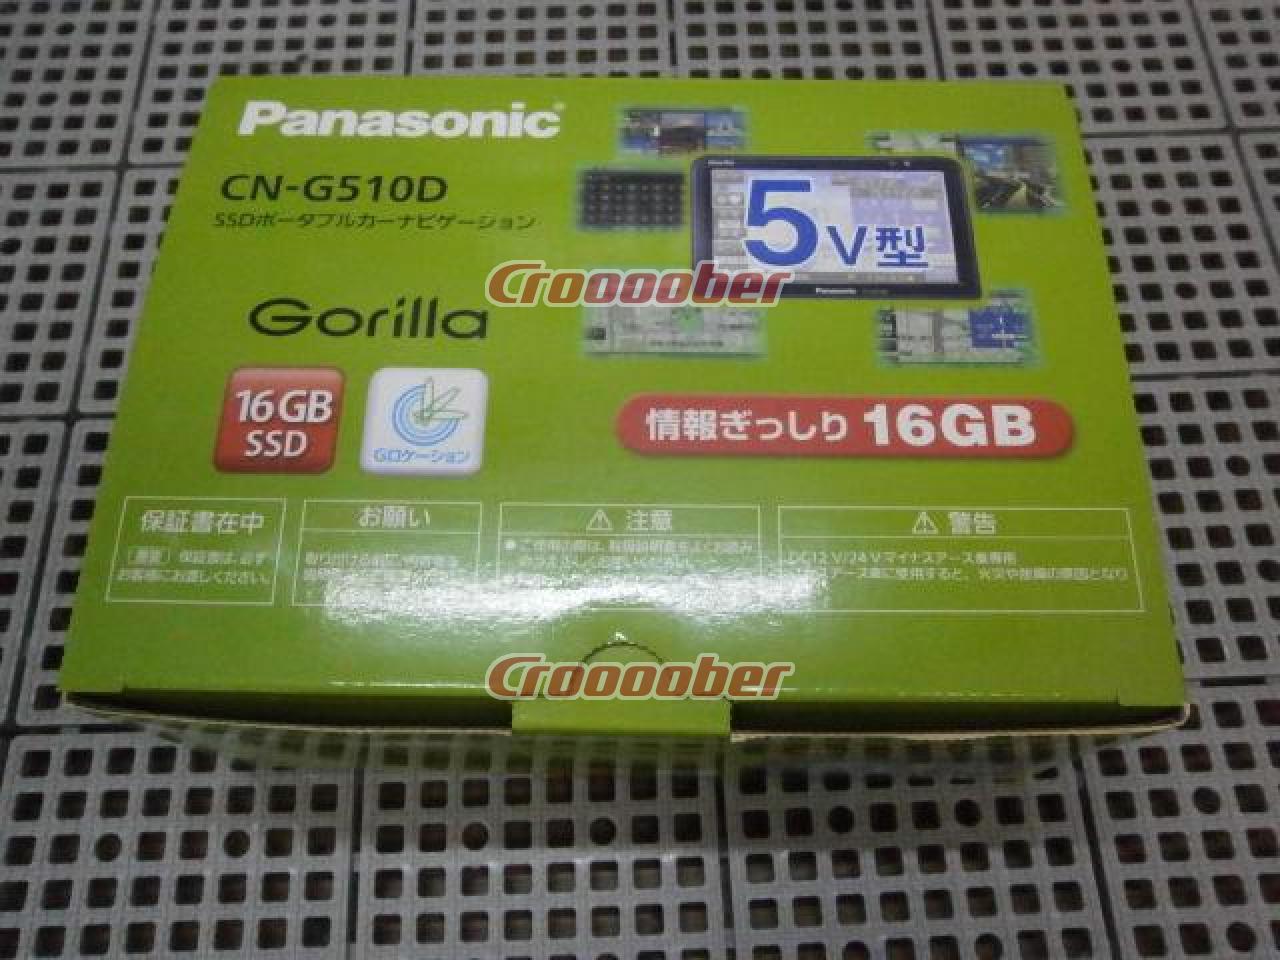 Panasonic Gorilla CN-G510D New Positioning System 